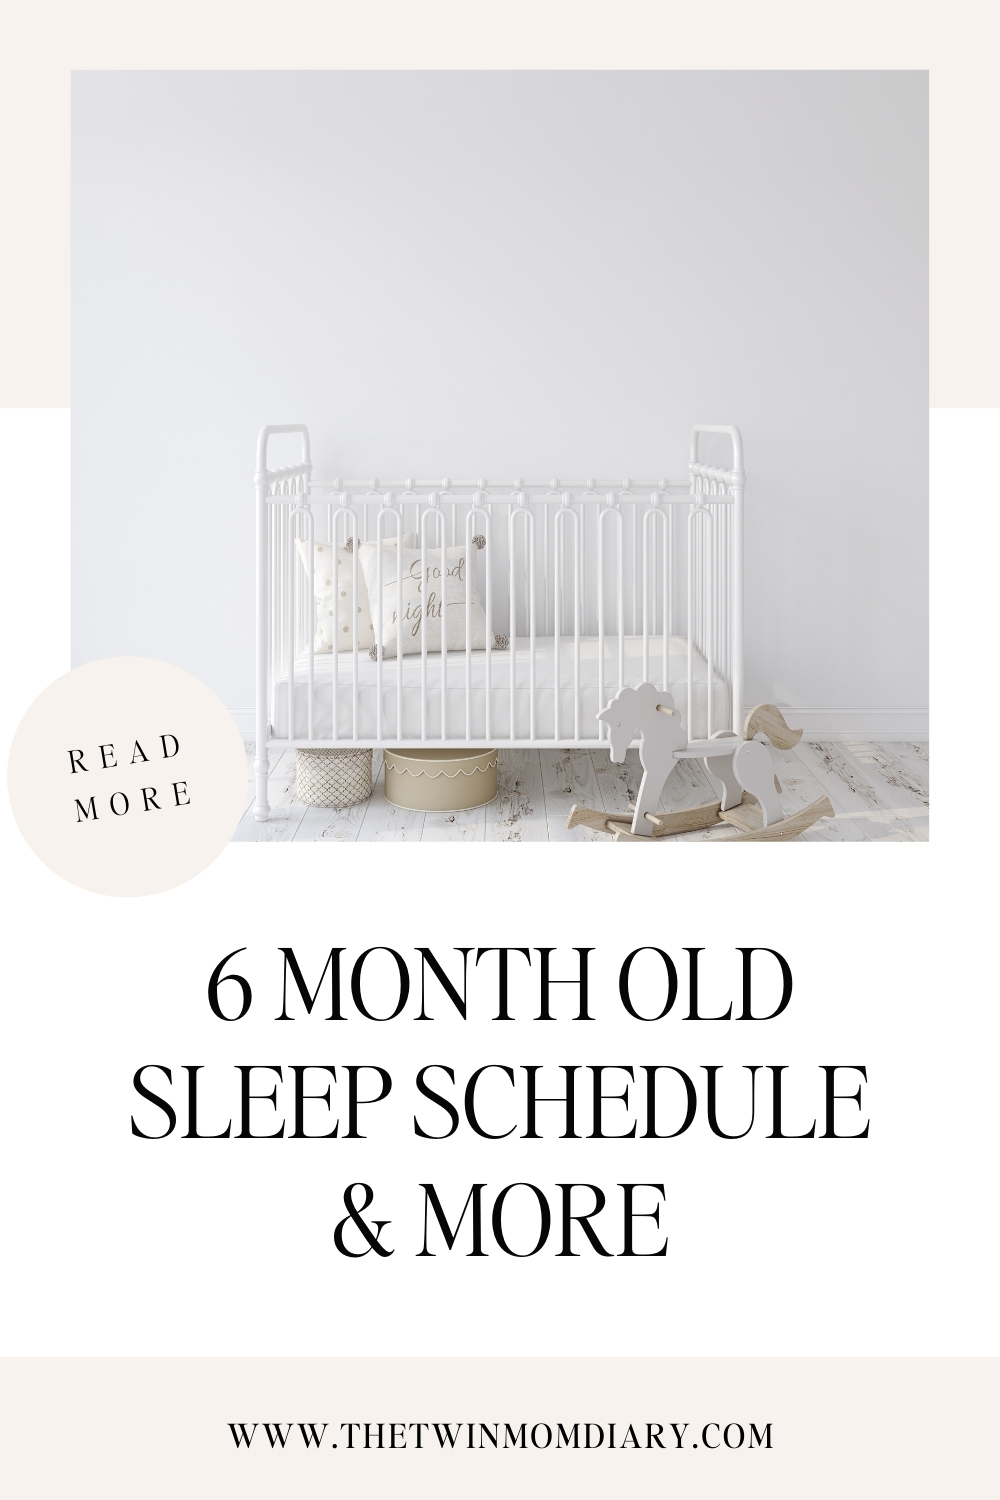 6 month old sleep schedule, 6 month old feeding schedule, 6 month old nap schedule, 6 month old schedule